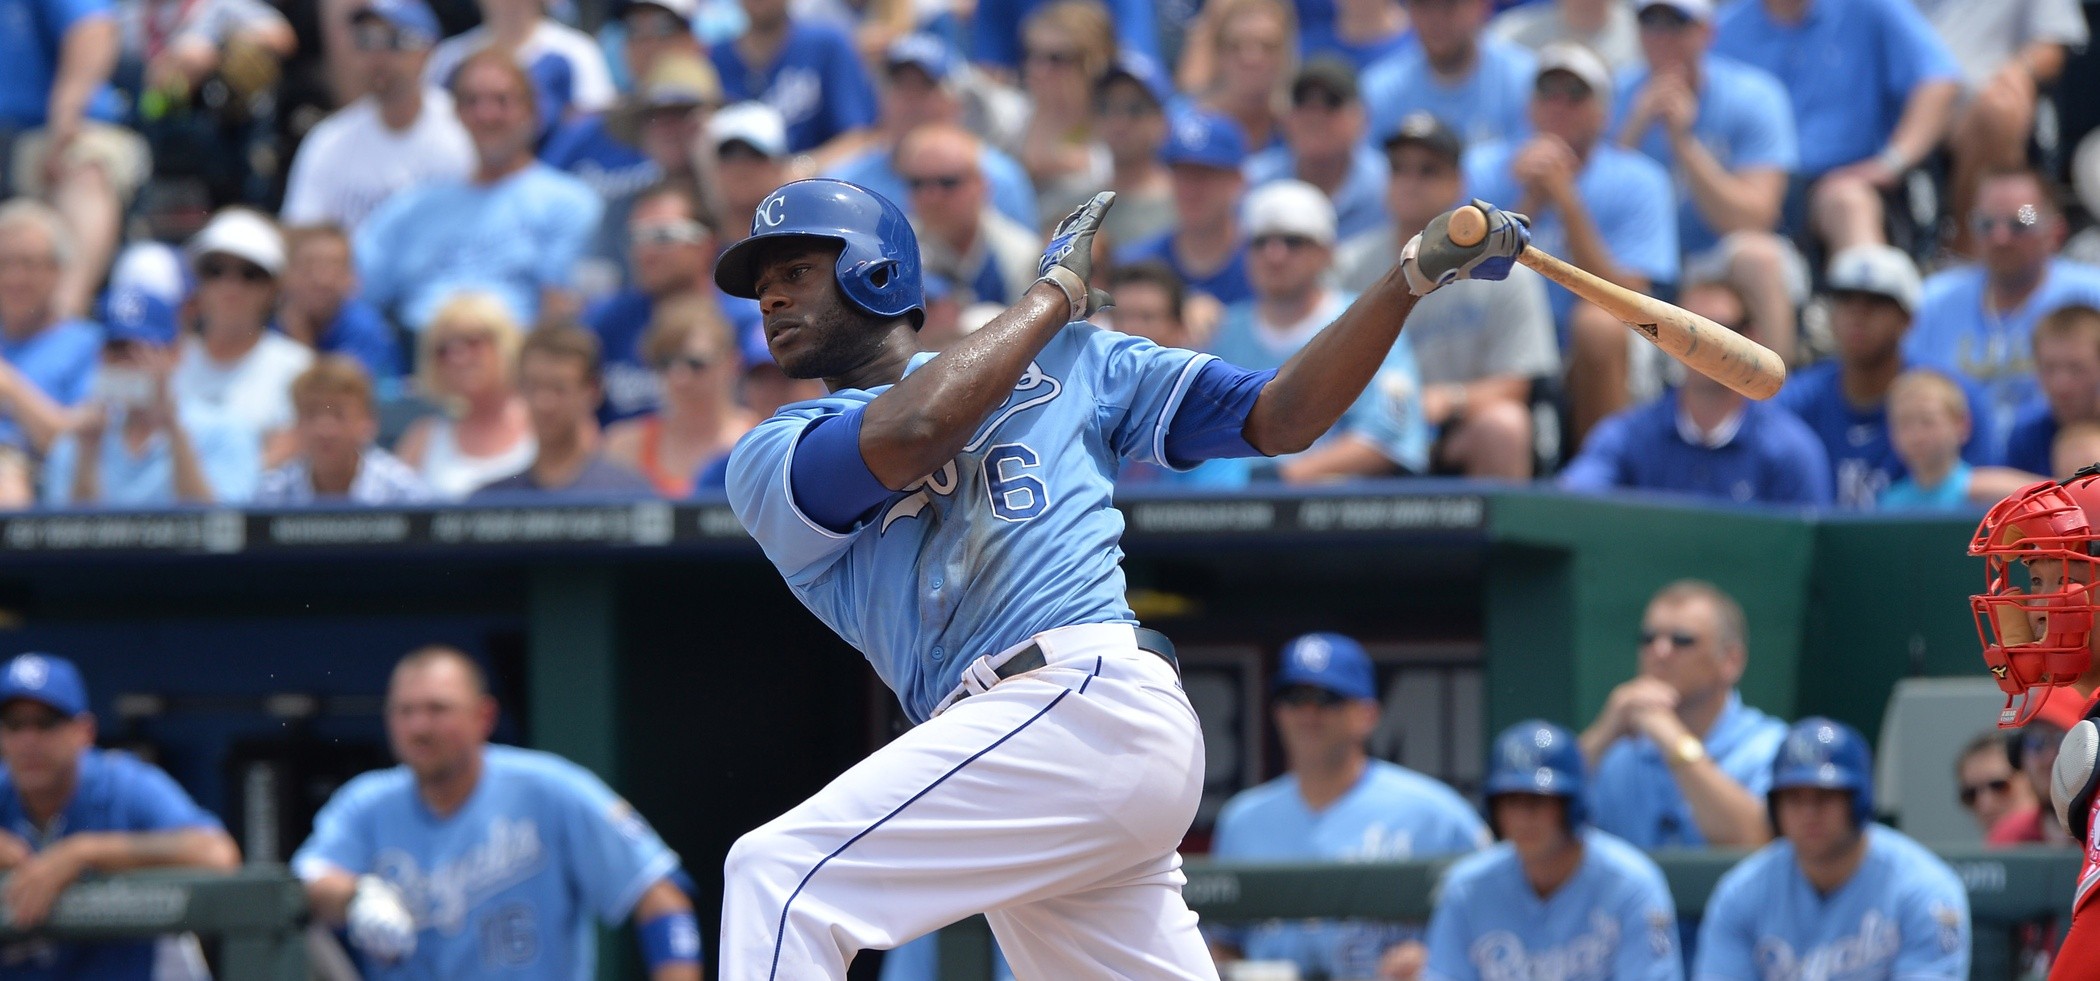 VIDEO: Royals’ Lorenzo Cain Smokes 423 Foot Home Run off Dallas Keuchel